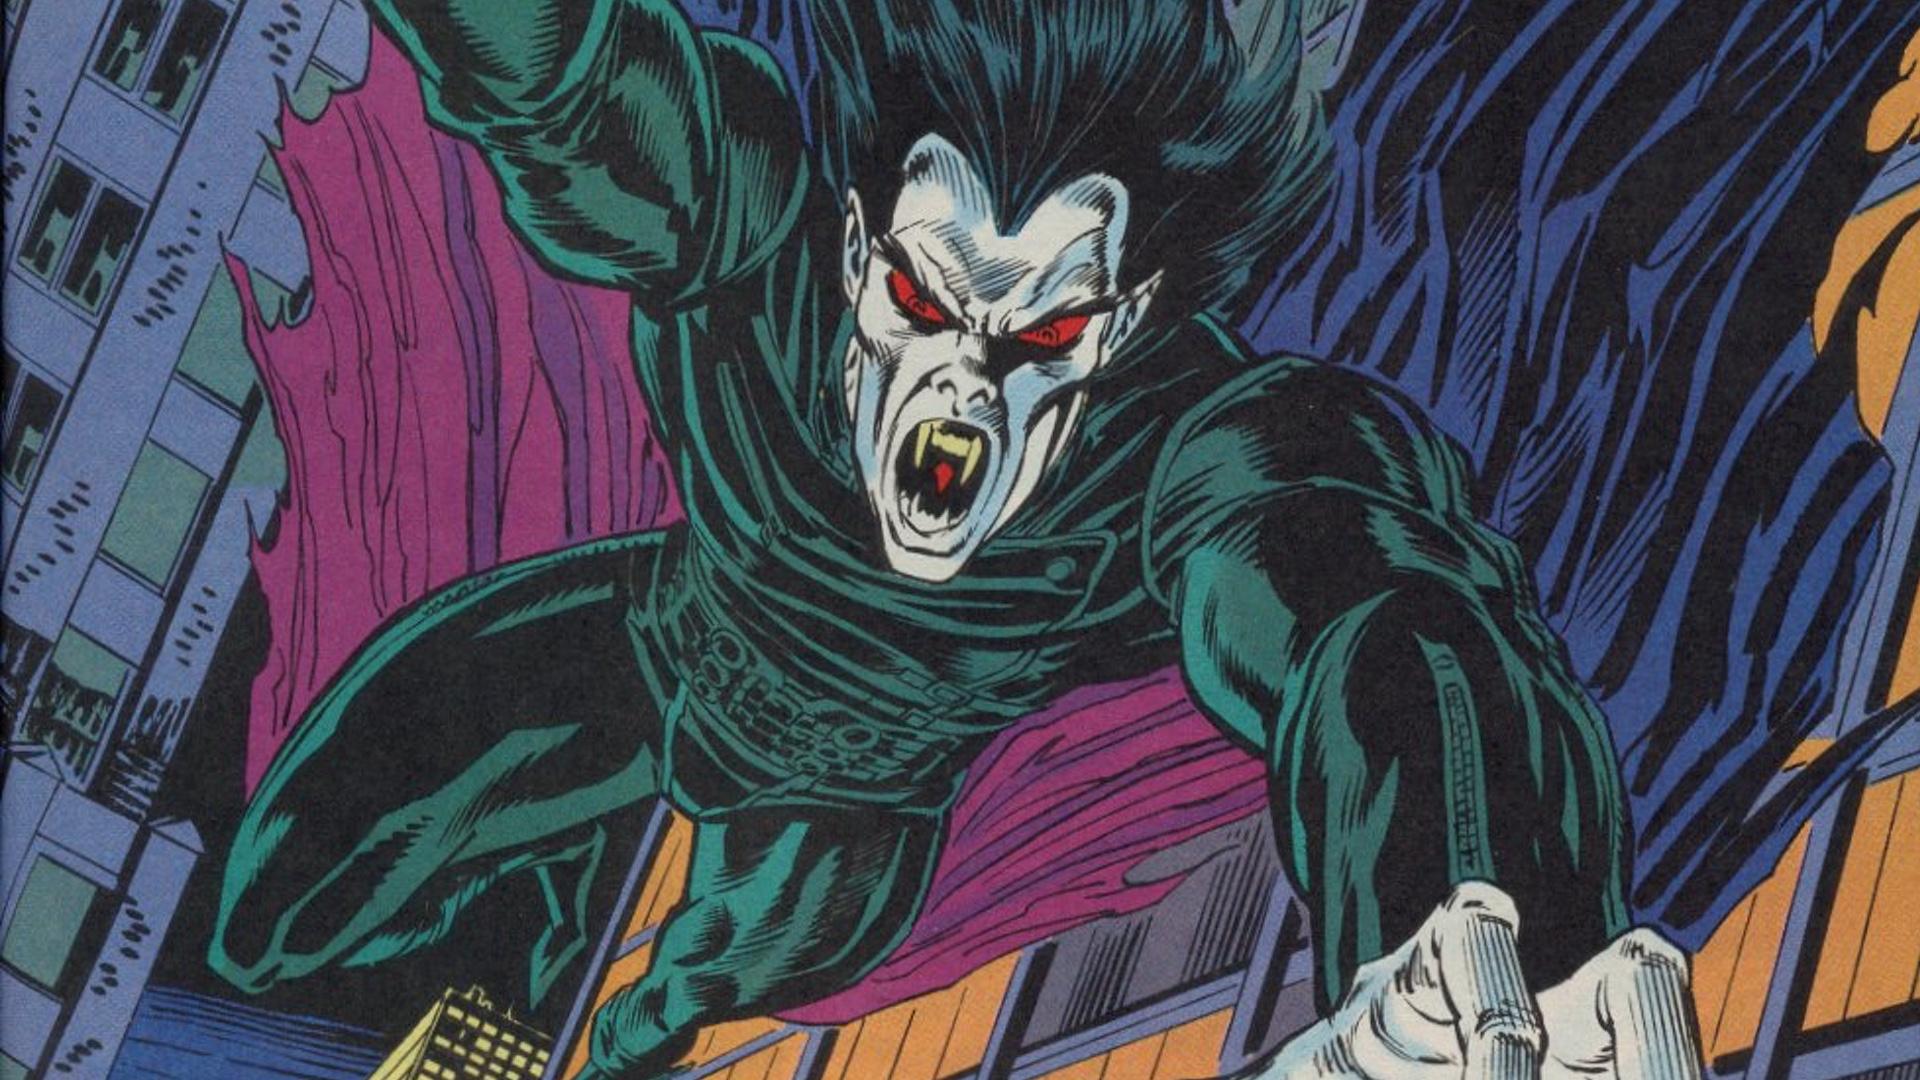 Jared Leto As Morbius Fanart Wallpapers